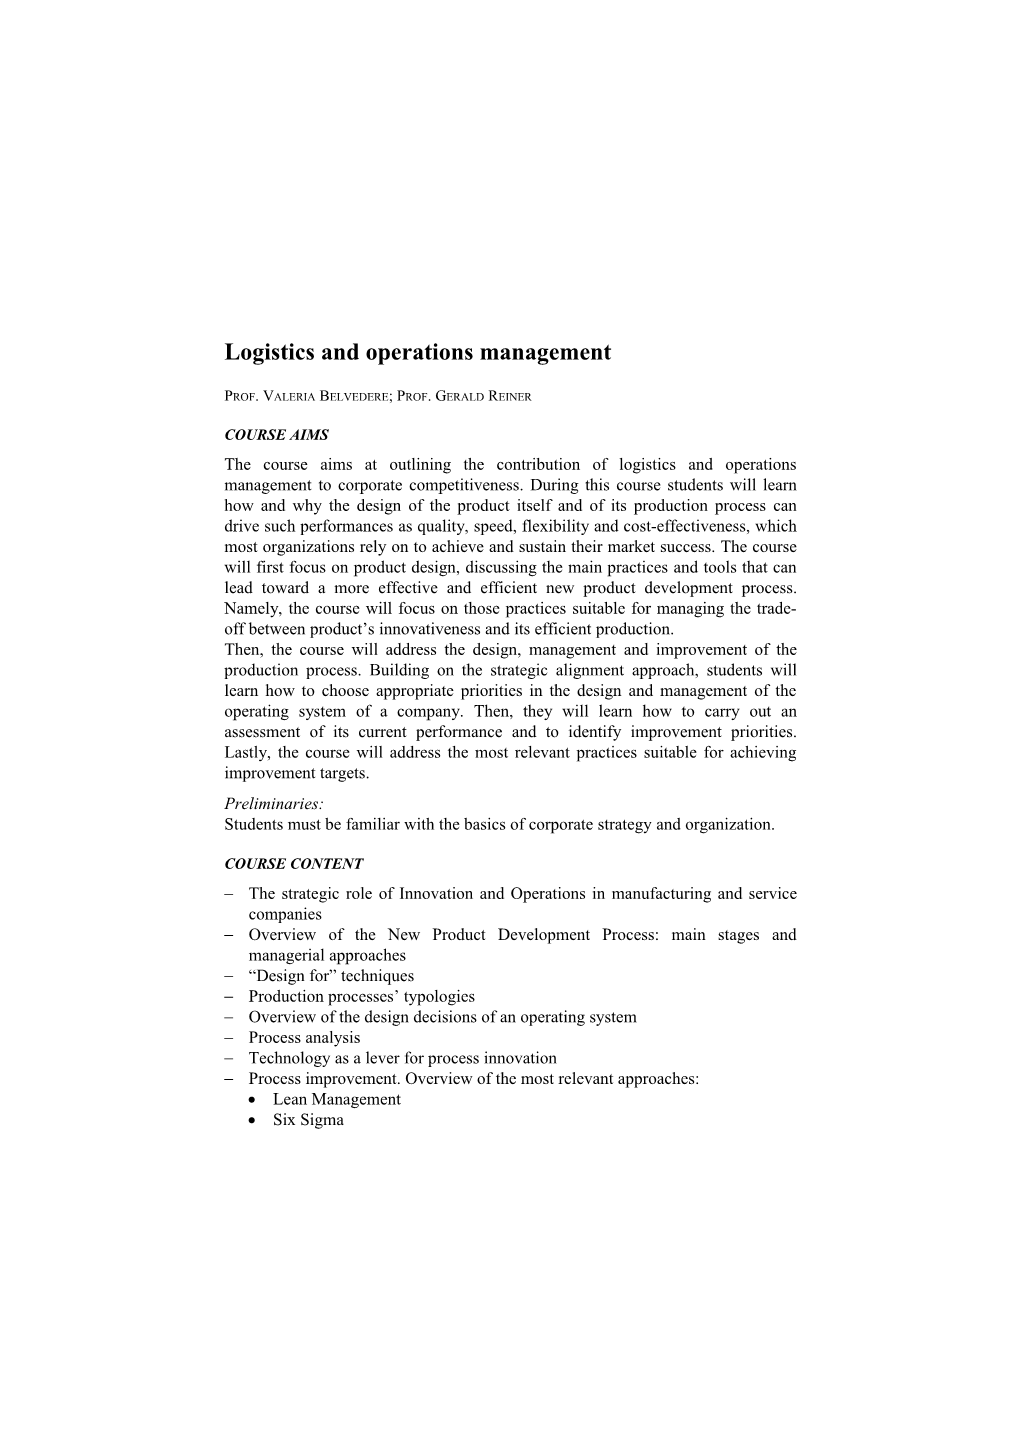 Logistics and Operations Management